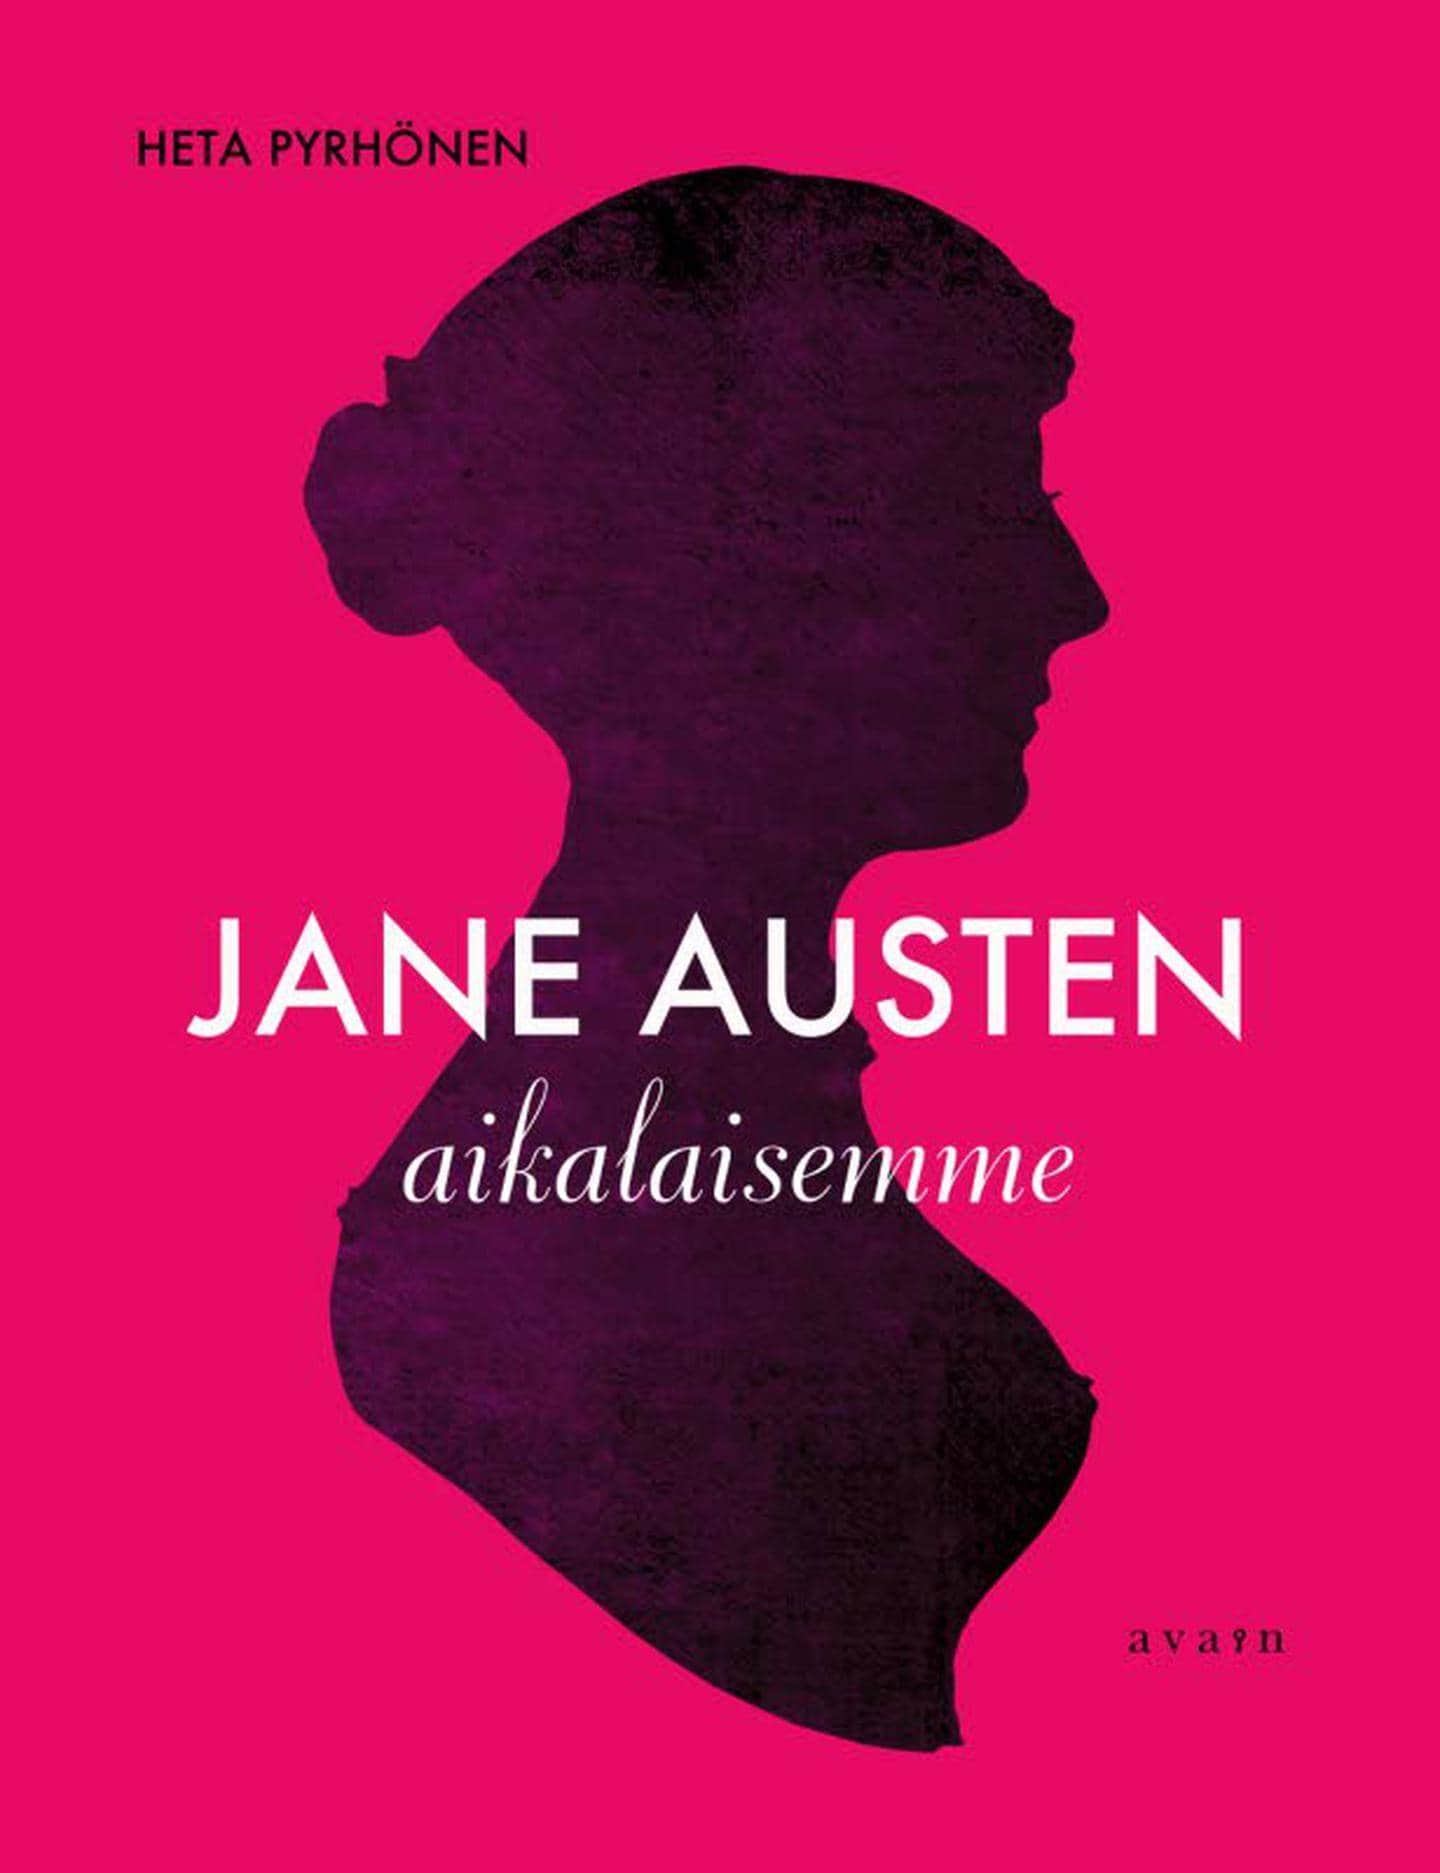 Jane Austen, aikalaisemme